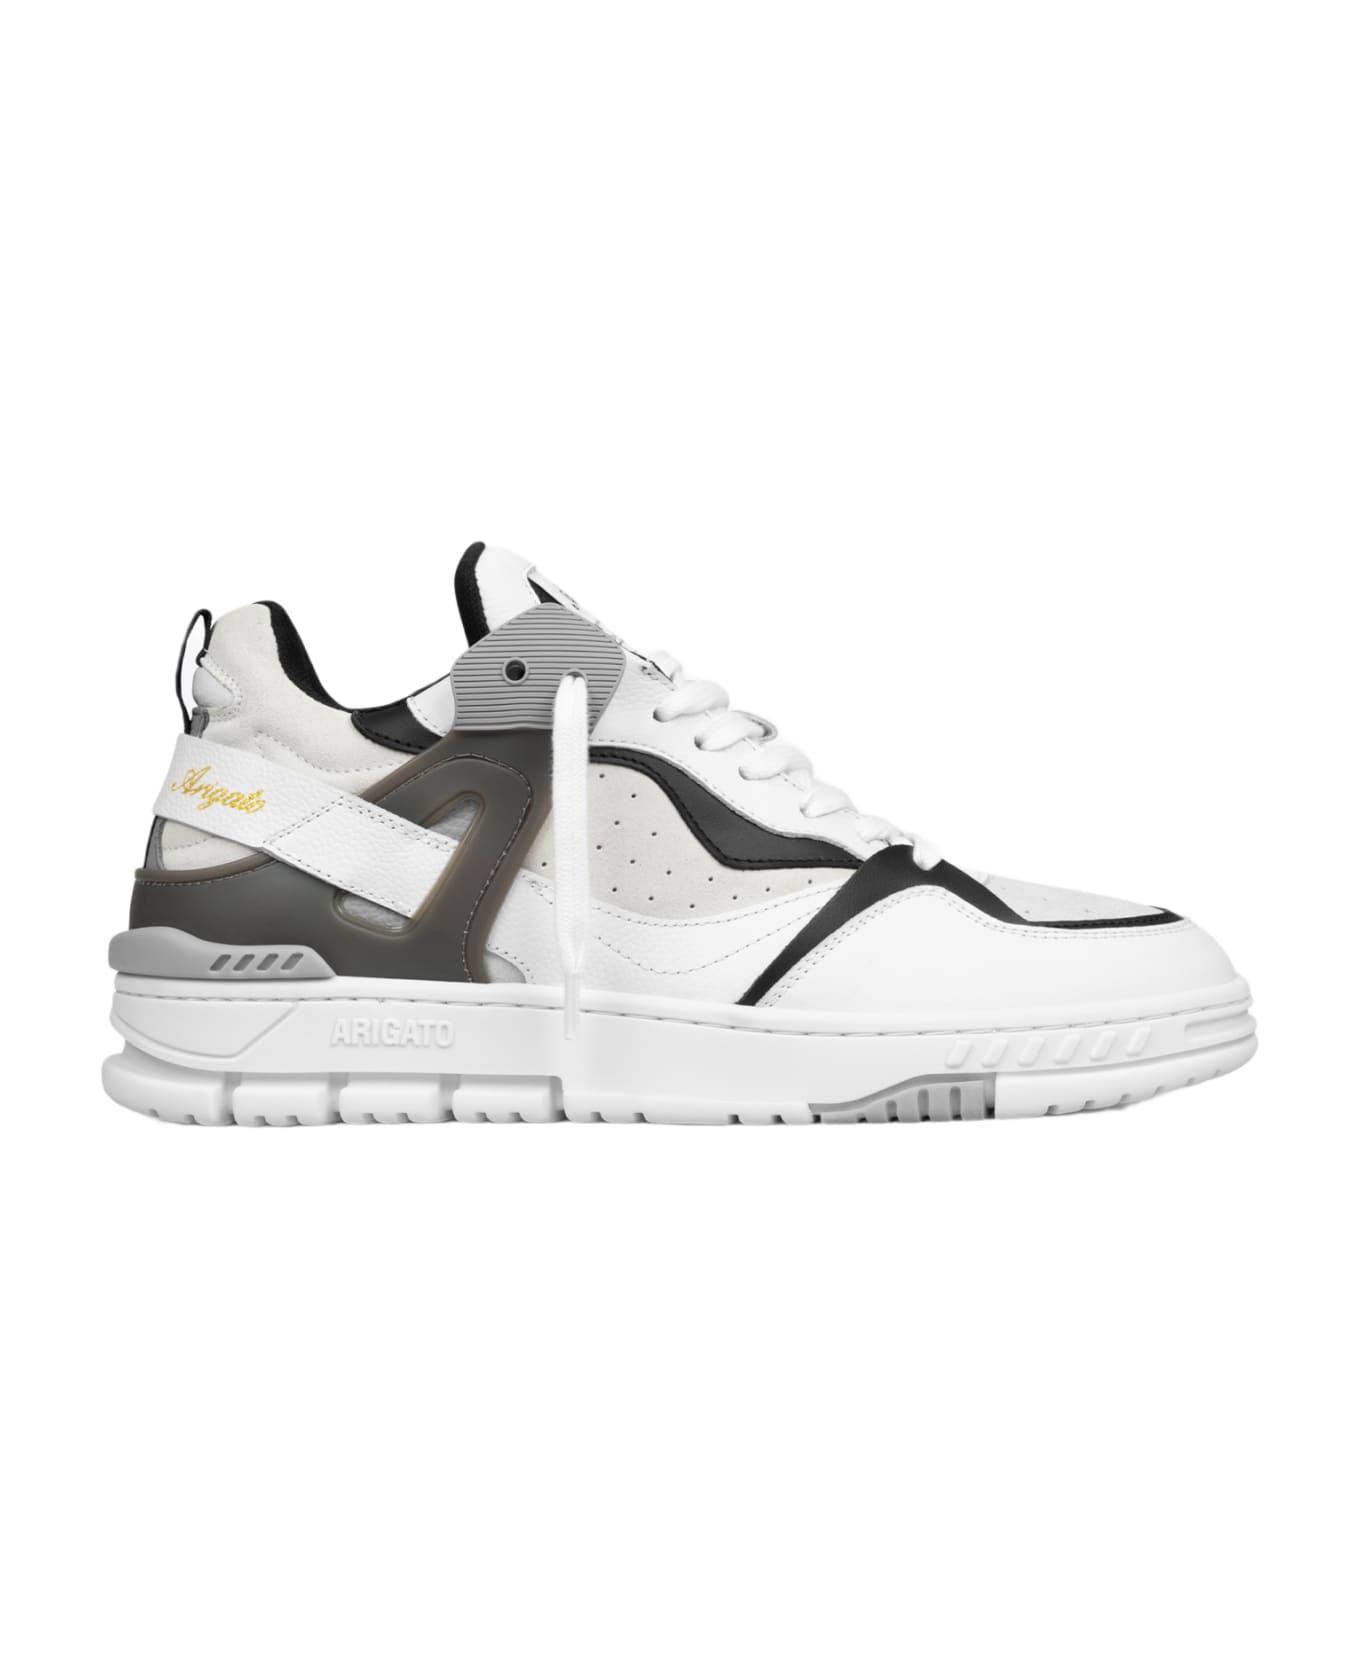 Axel Arigato Astro Sneaker White and black leather 90s style low sneaker - Astro Sneaker - Bianco/nero